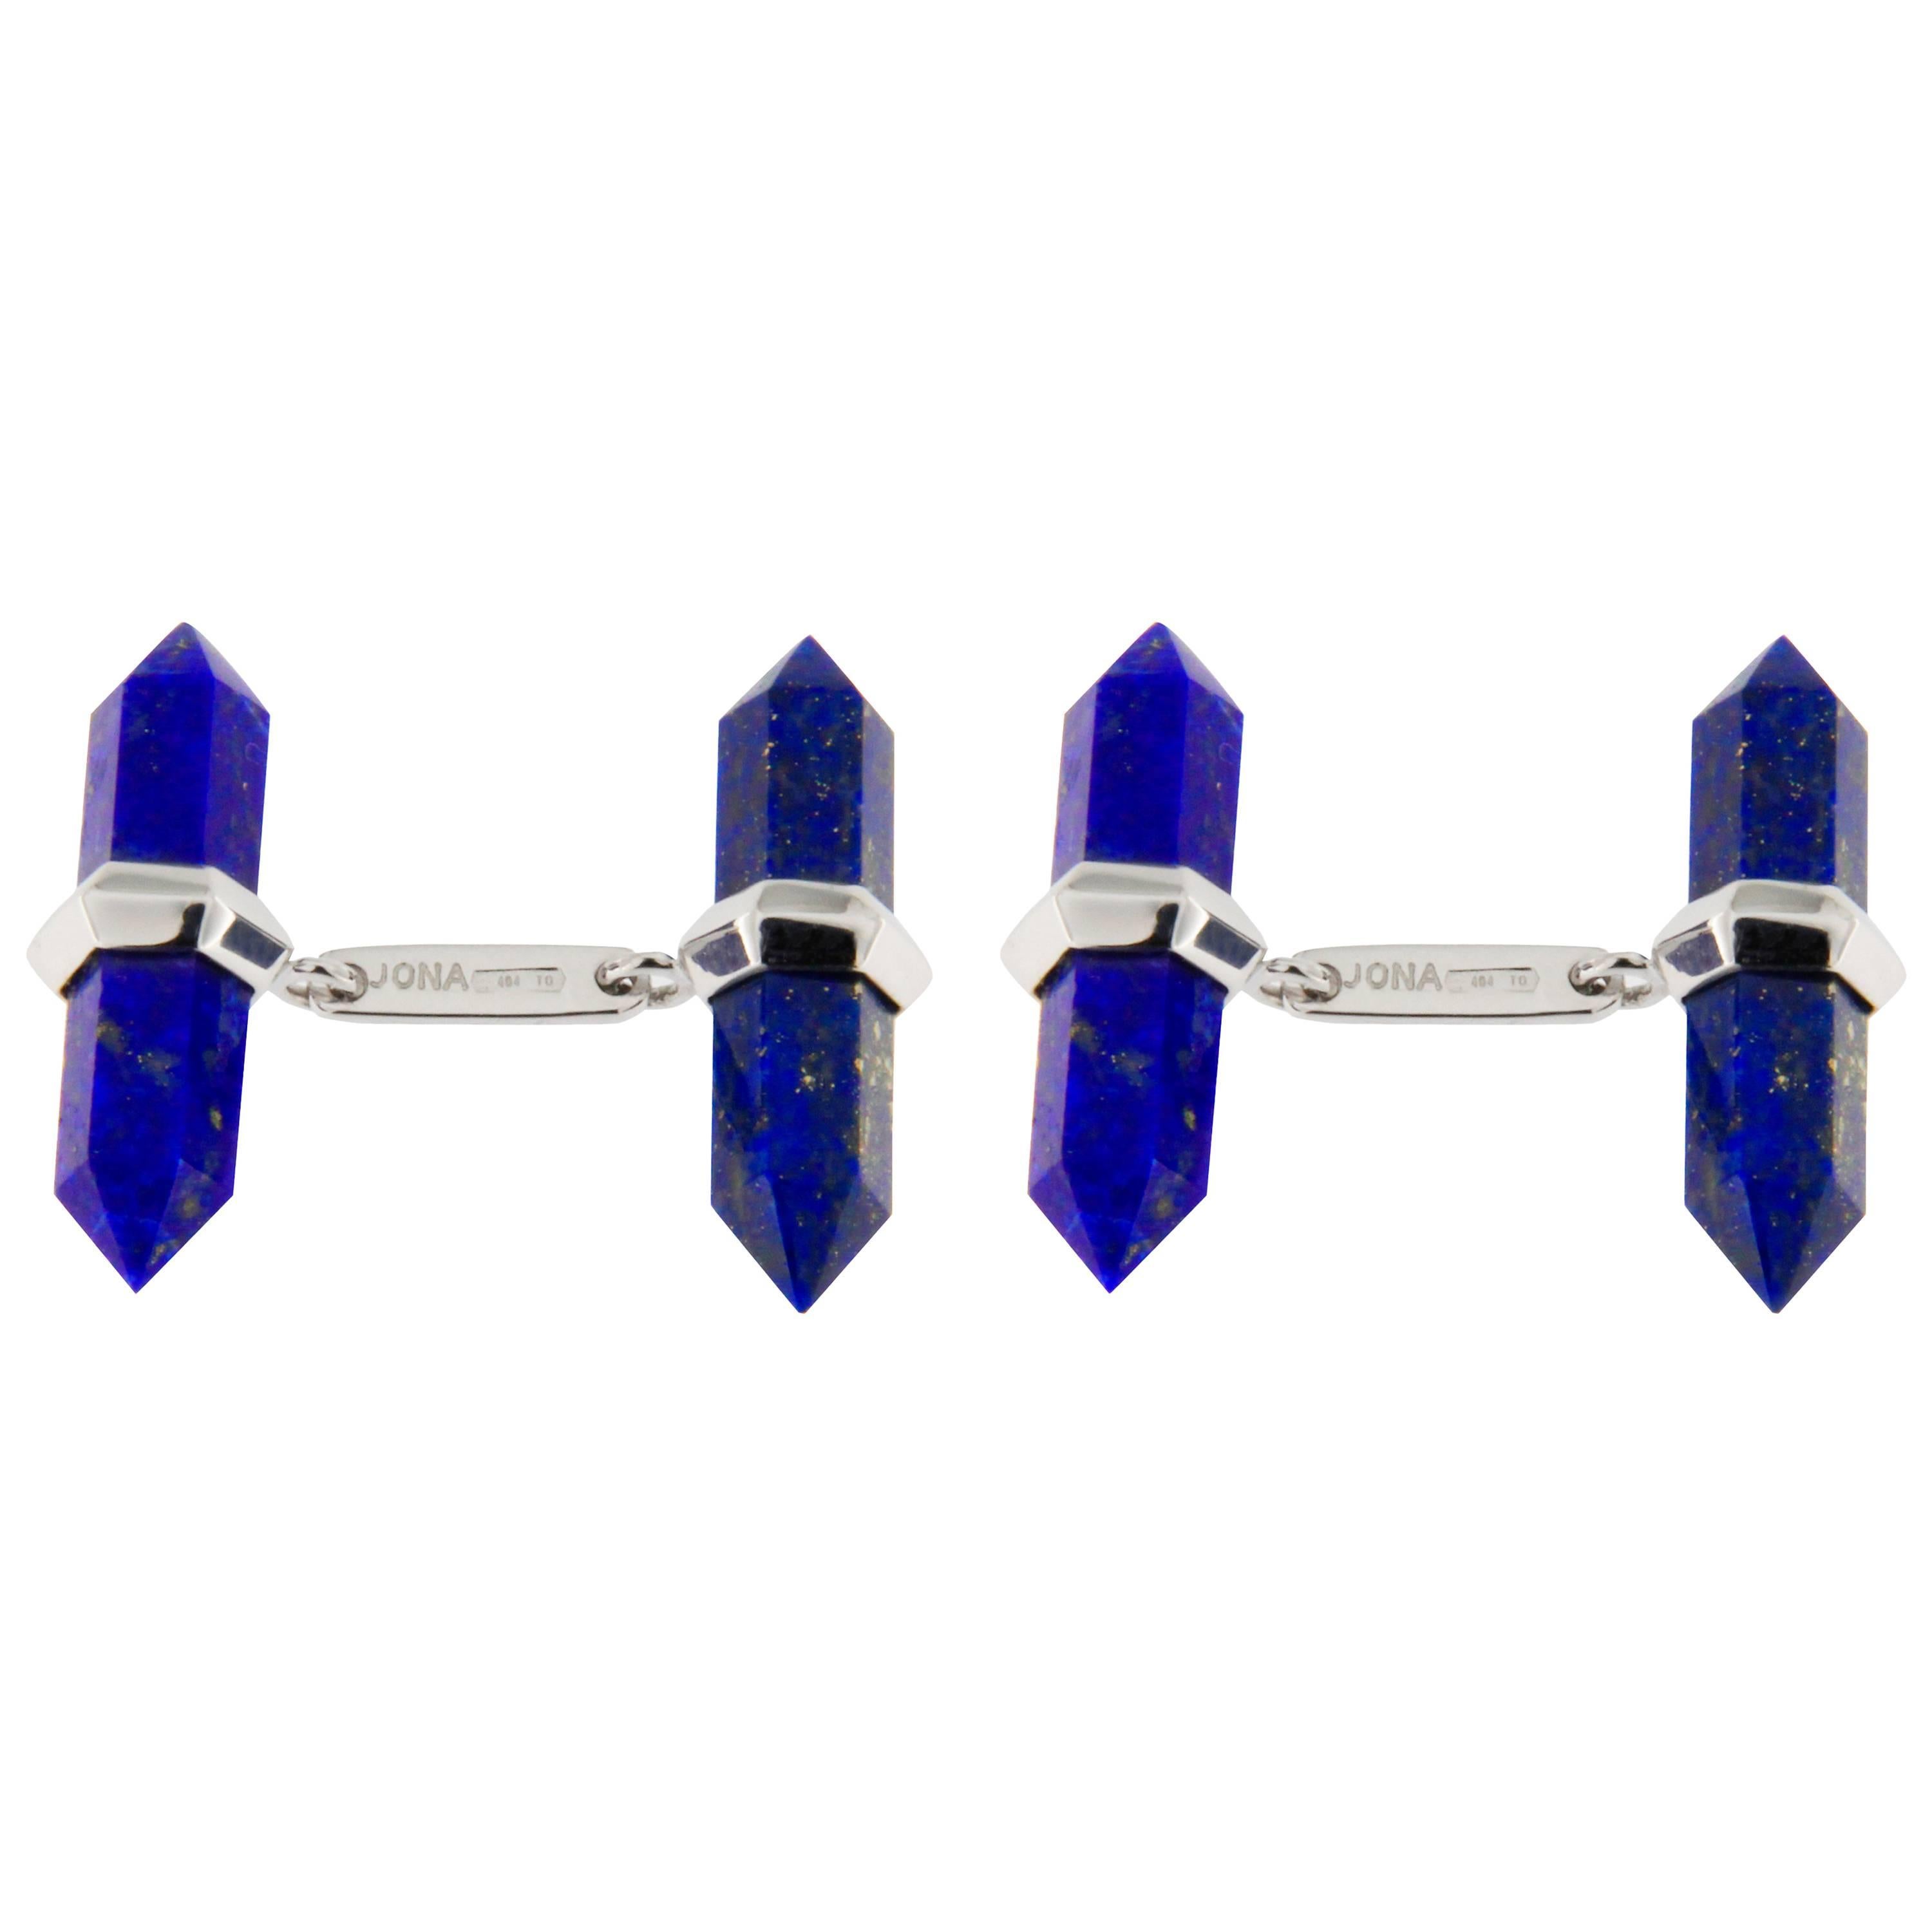 Alex Jona Lapis Lazuli 18 Karat White Gold Prism Bar Cufflinks